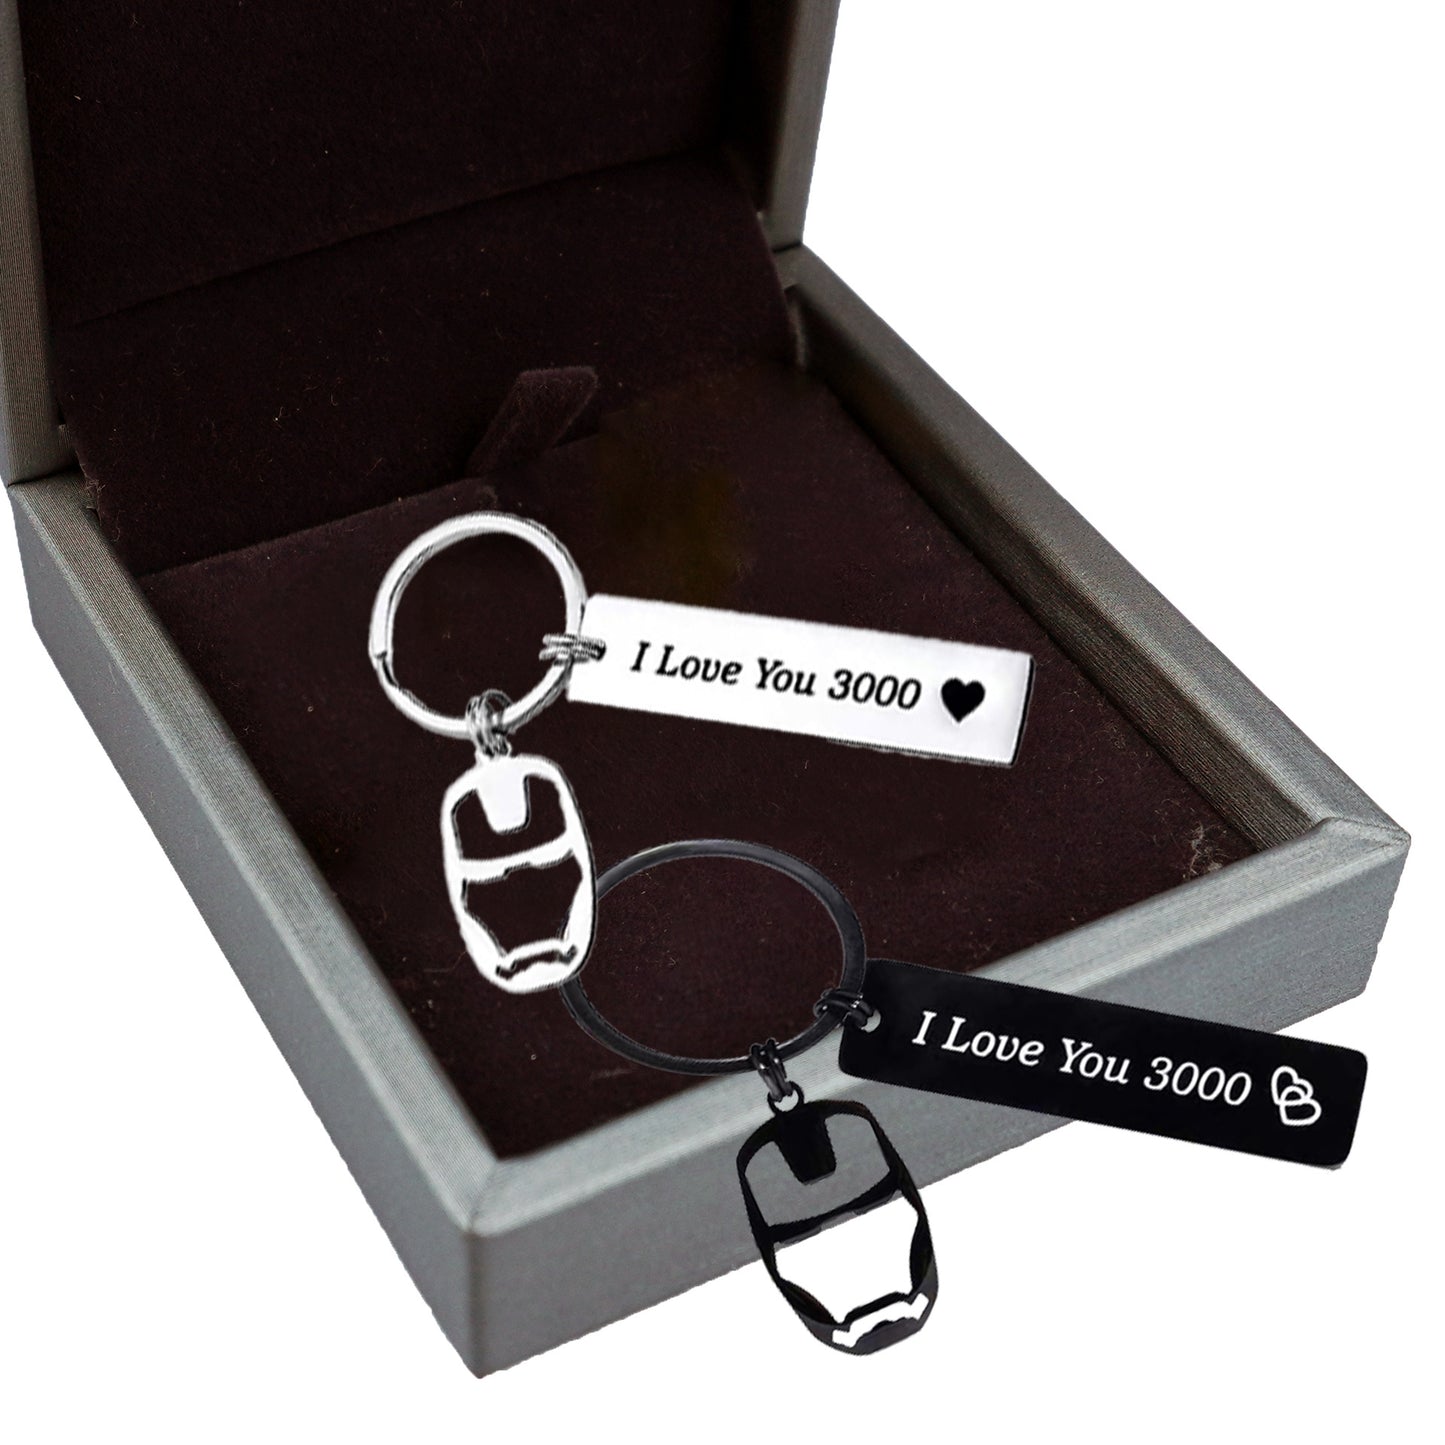 ABS "I Love You 3000" Key Chain